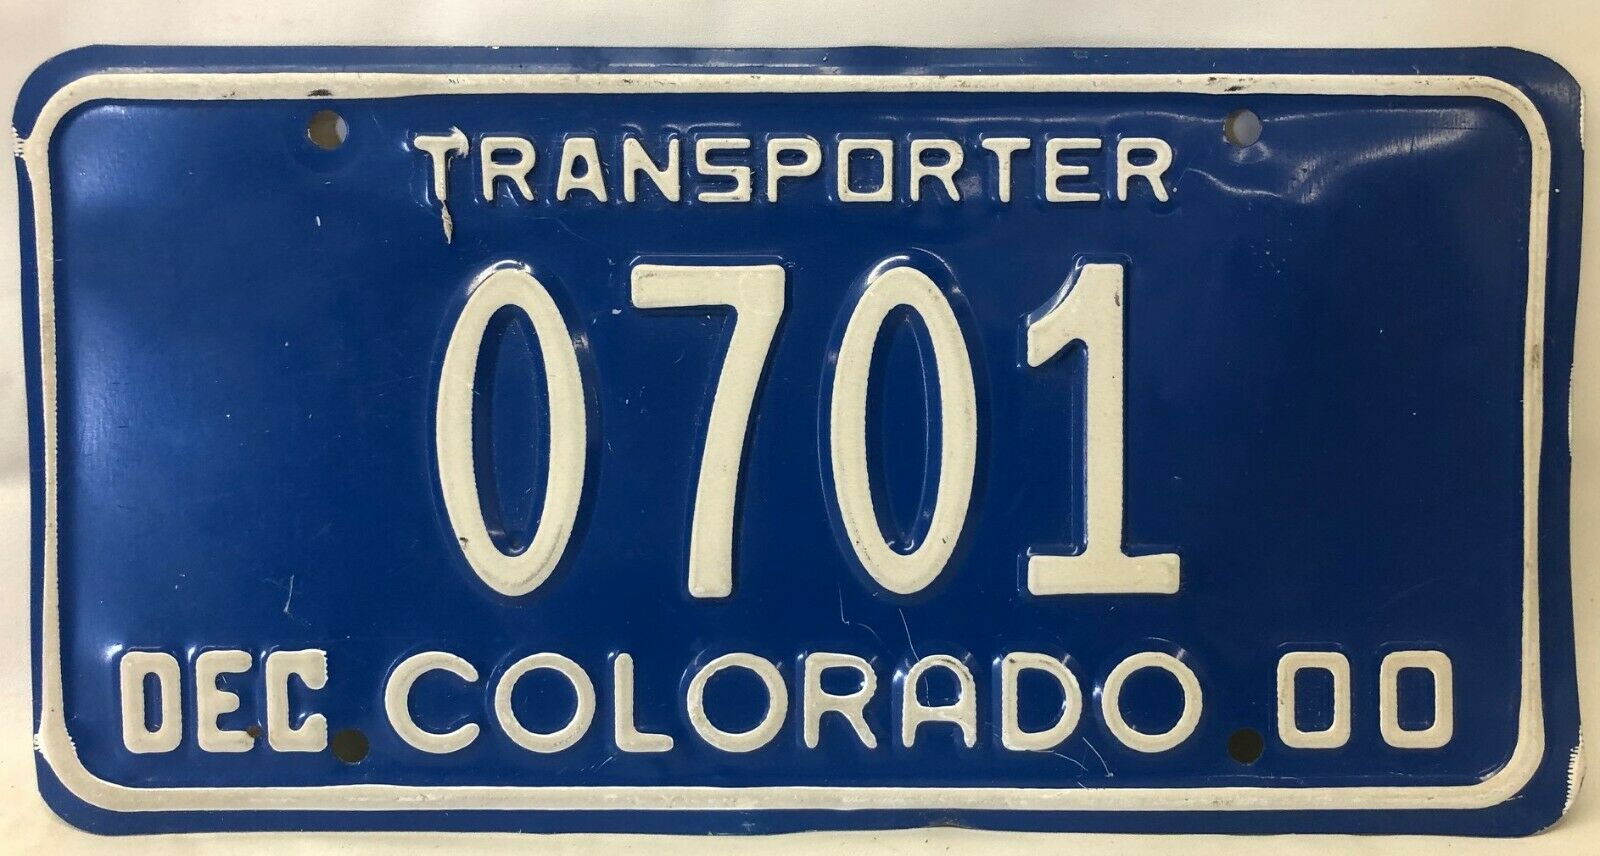 Vintage Transporter License Plate 2000 Colorado 0701